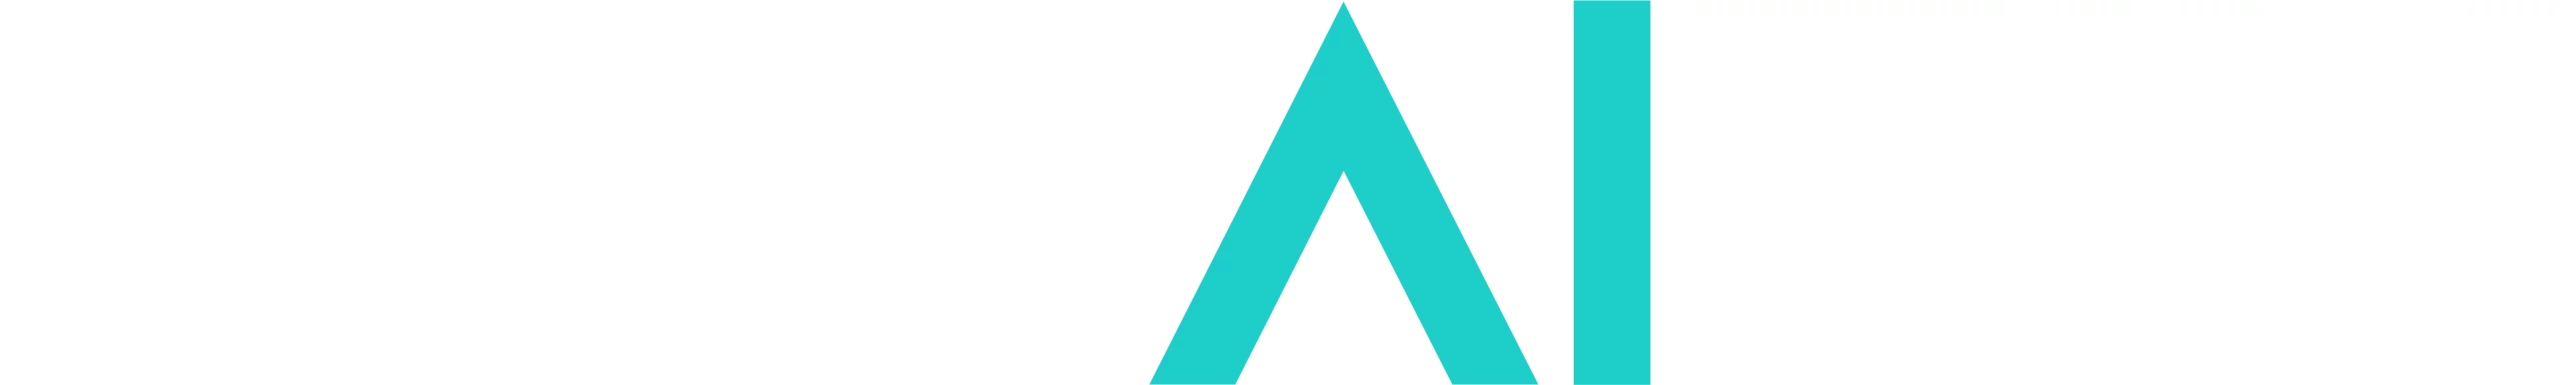 Desaisiv logo-04